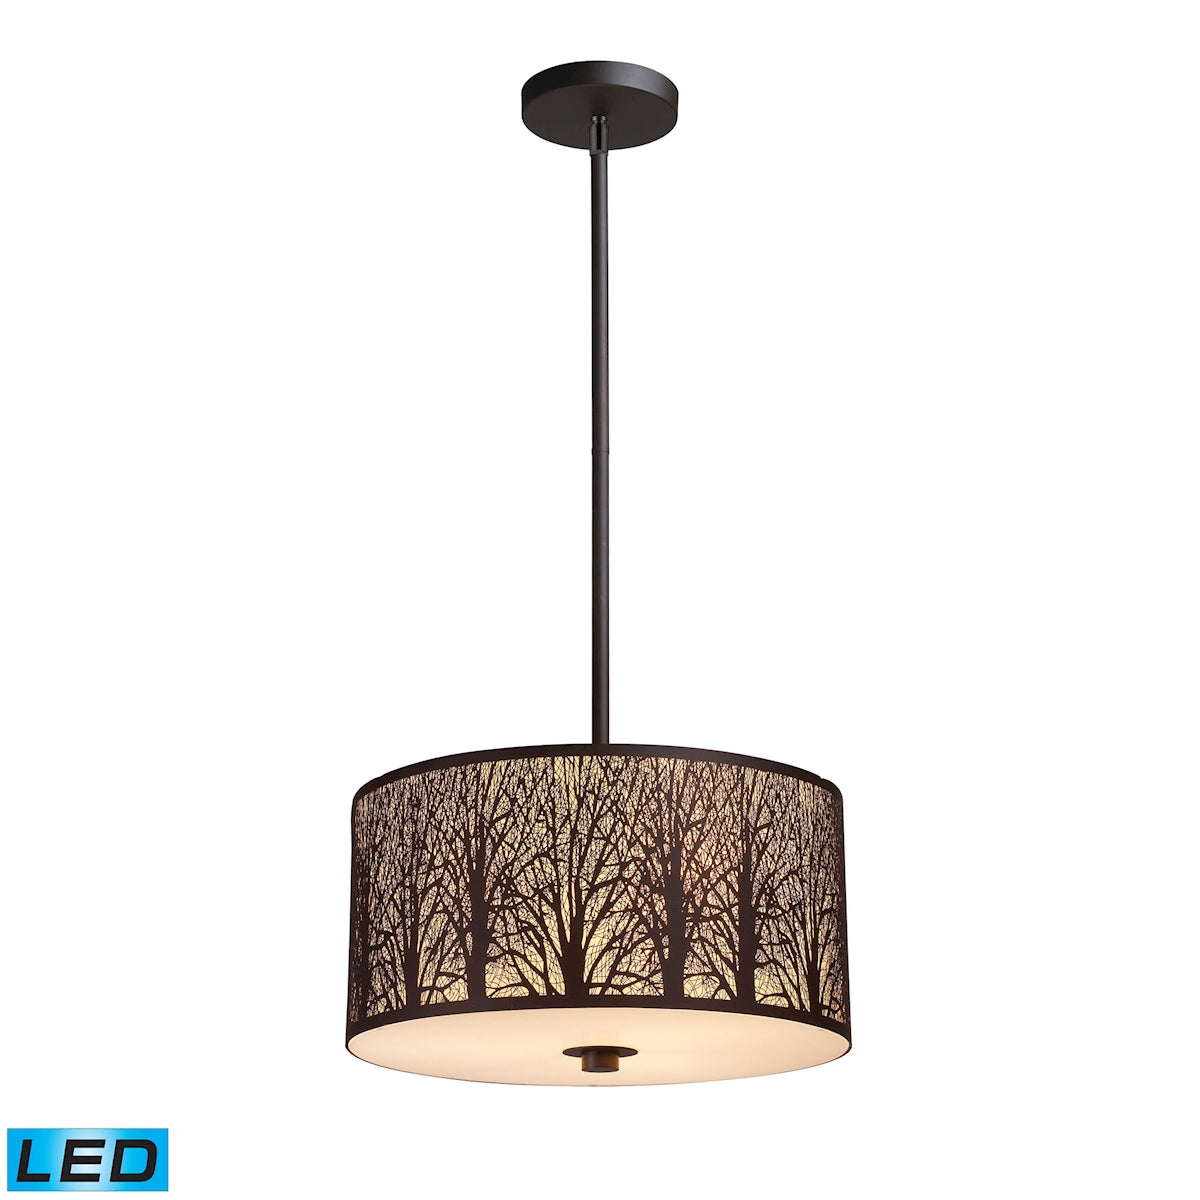 ELK Lighting 31074/3-LED Woodland Sunrise 3-Light Pendant in Aged Bronze with Woodland Shade - Includes LED Bulbs